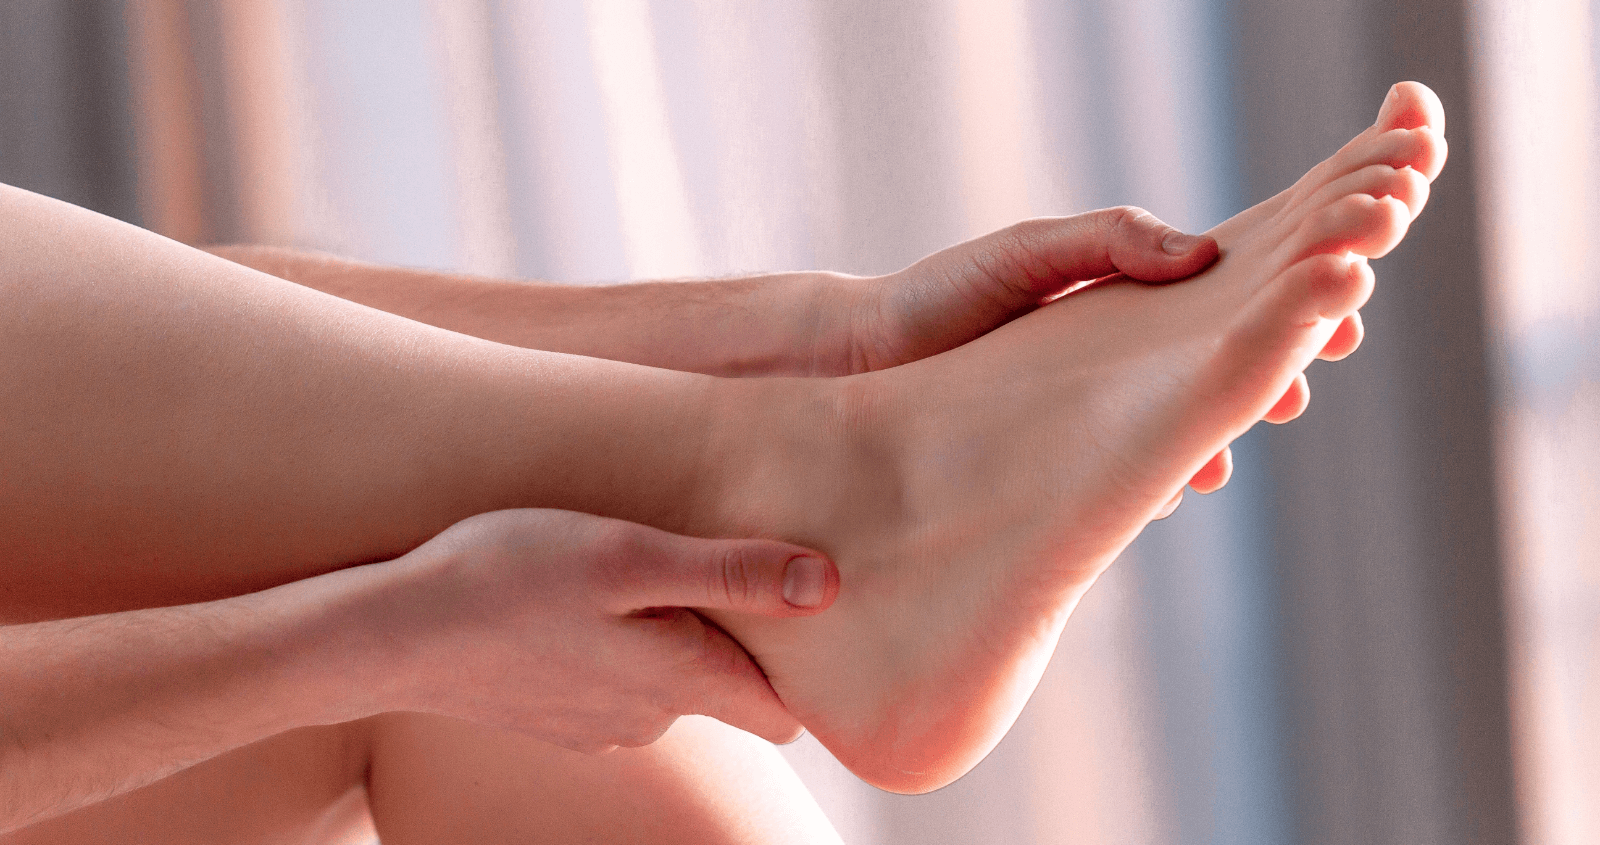 Foot Discomfort an Anxiety Symptom?